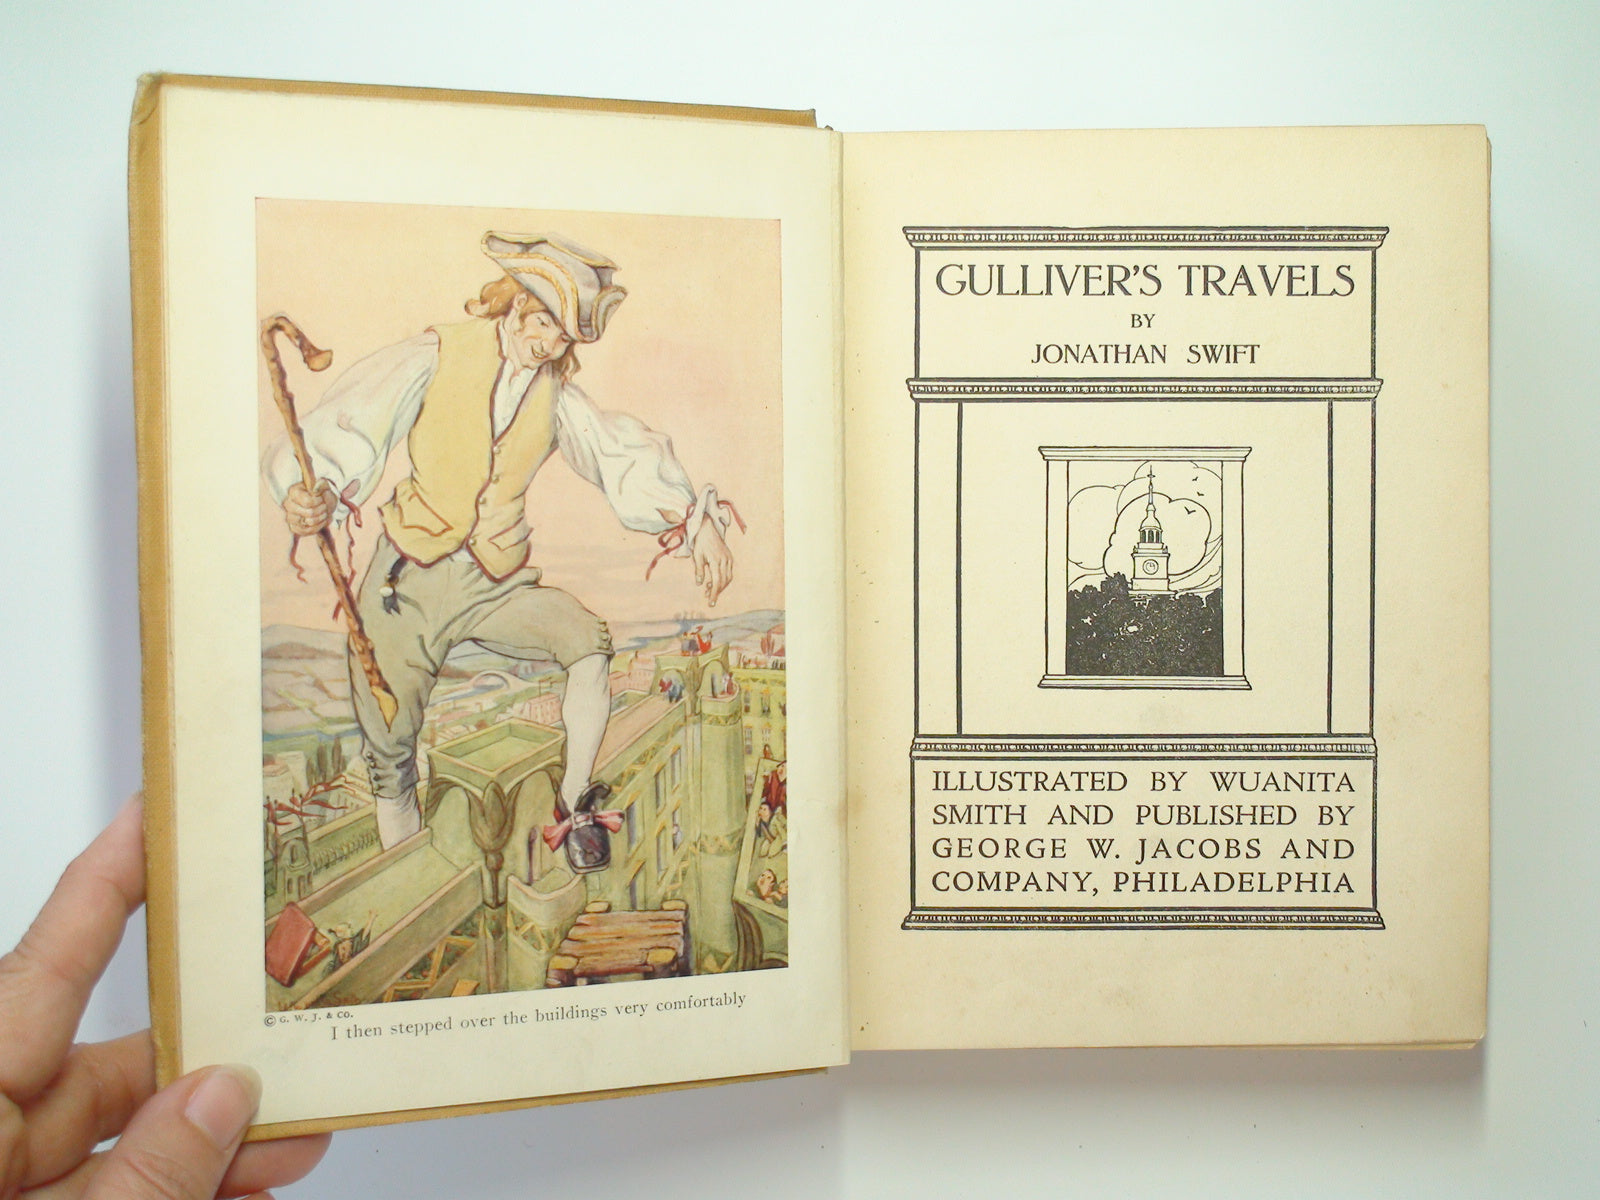 Gulliver's Travels, by Jonathan Swift, Washington Sq. Classics, Illustrated, c1923